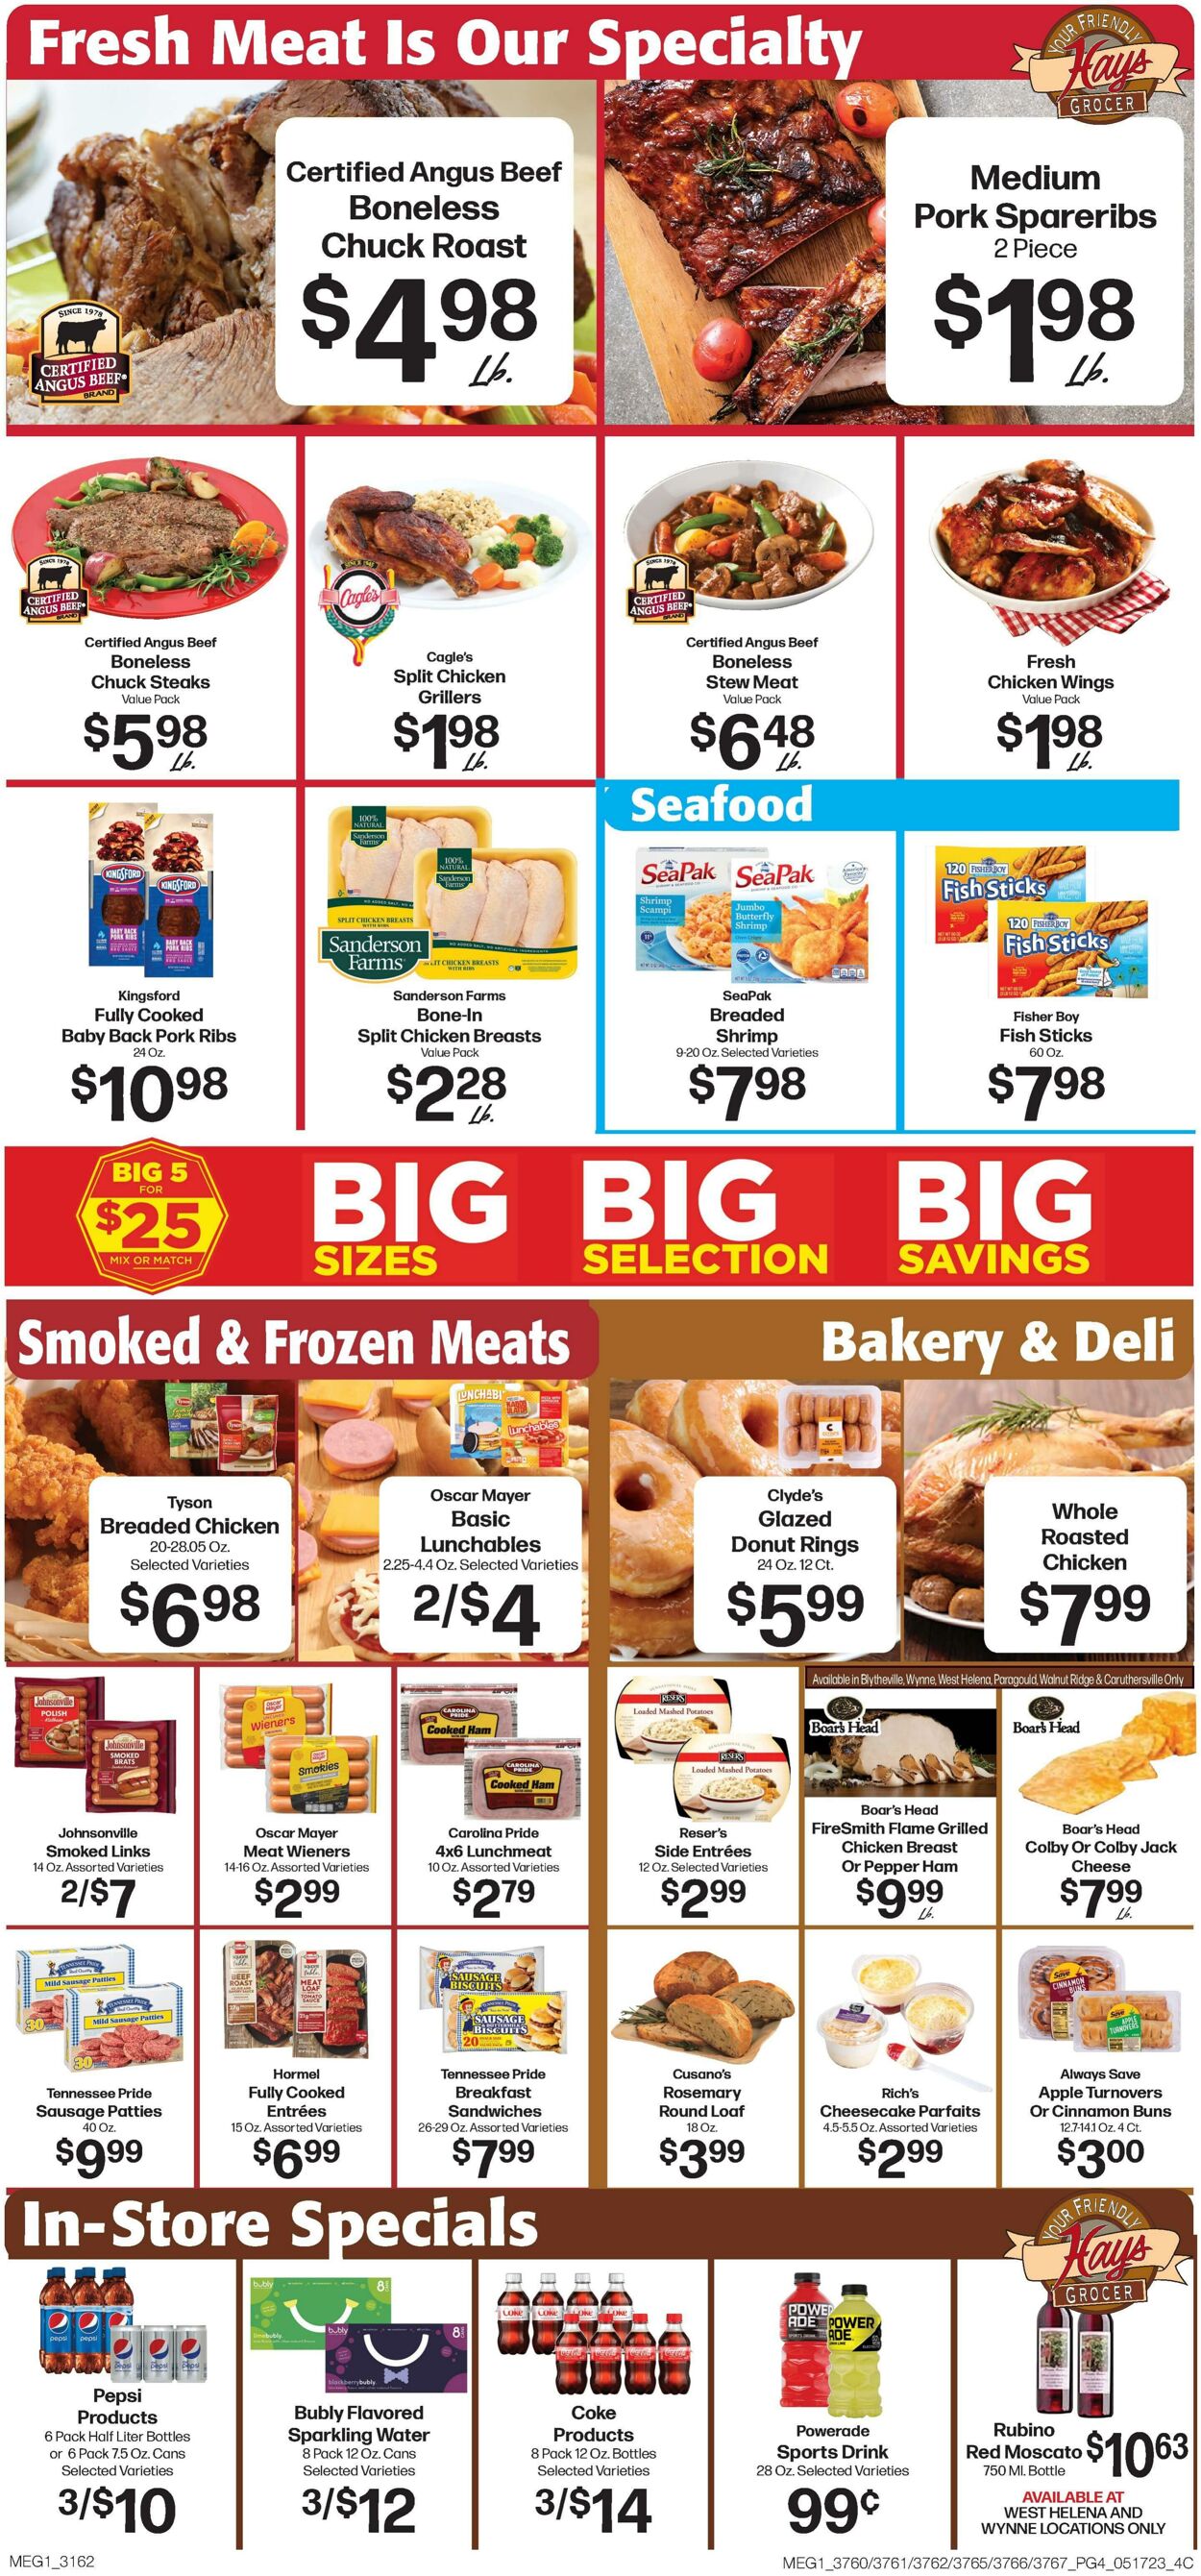 Weekly ad Hays Supermarkets 05/17/2023 - 05/23/2023